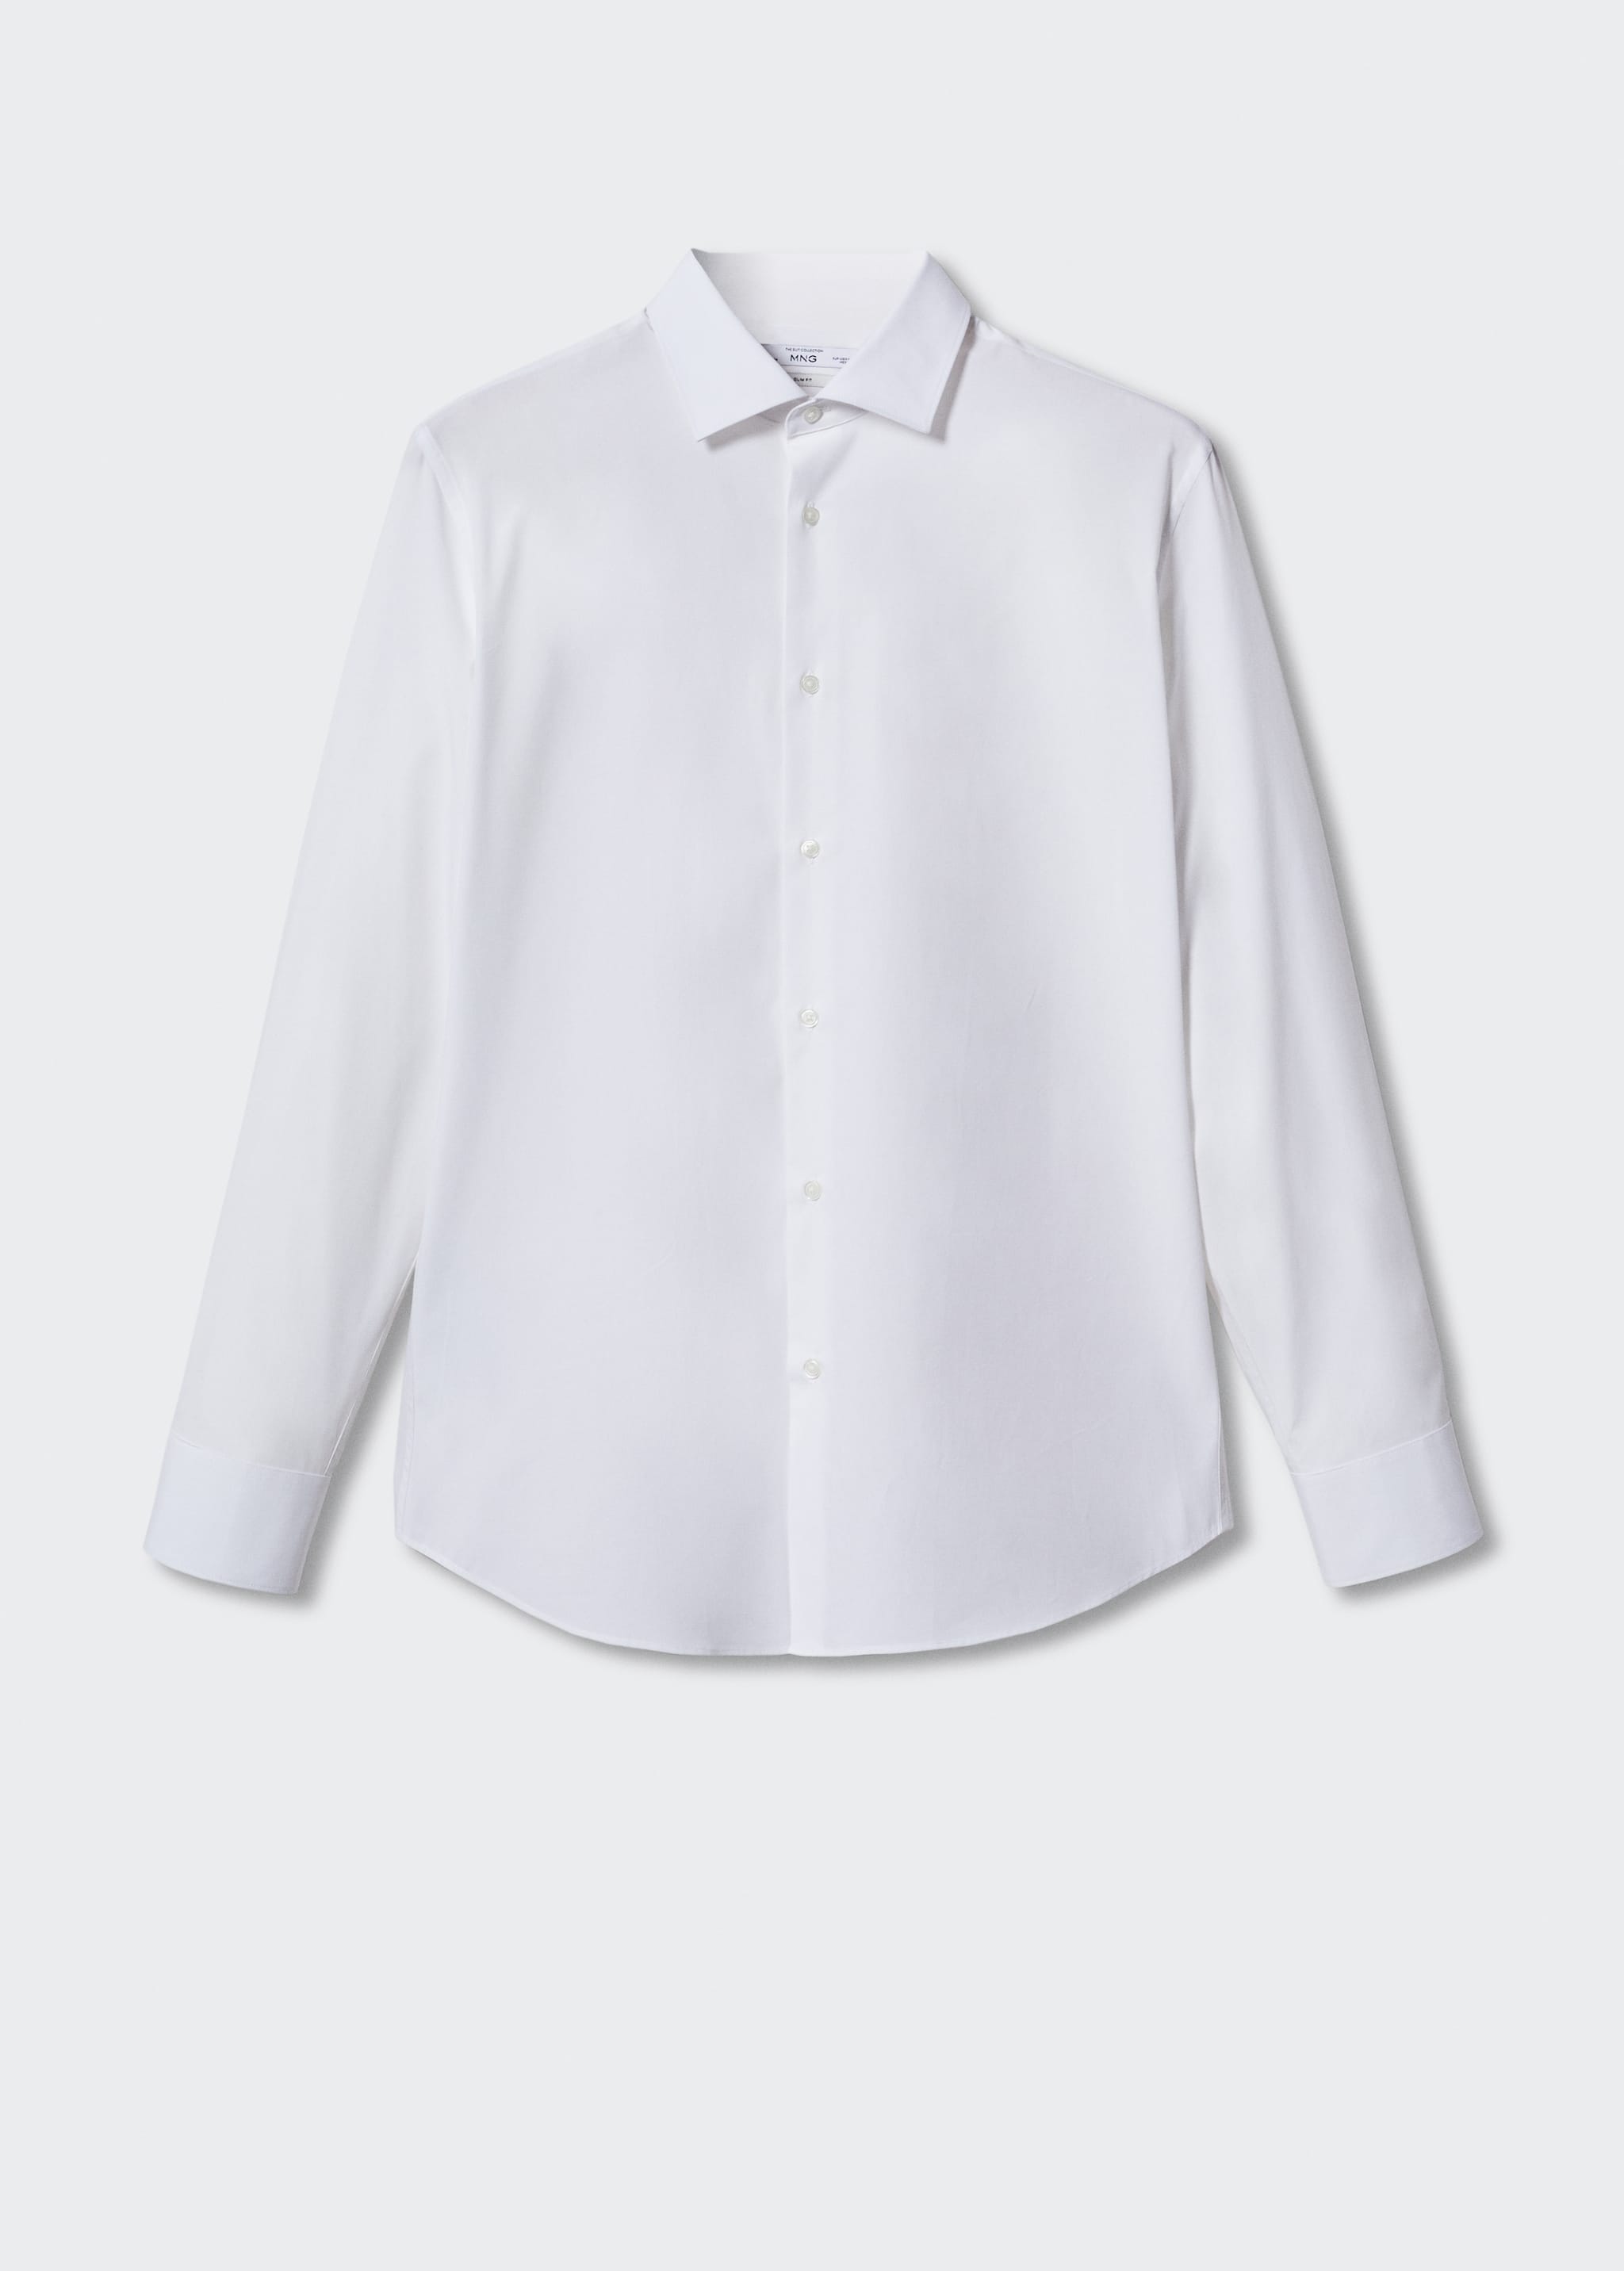 Slim fit stretch cotton suit shirt - Article without model